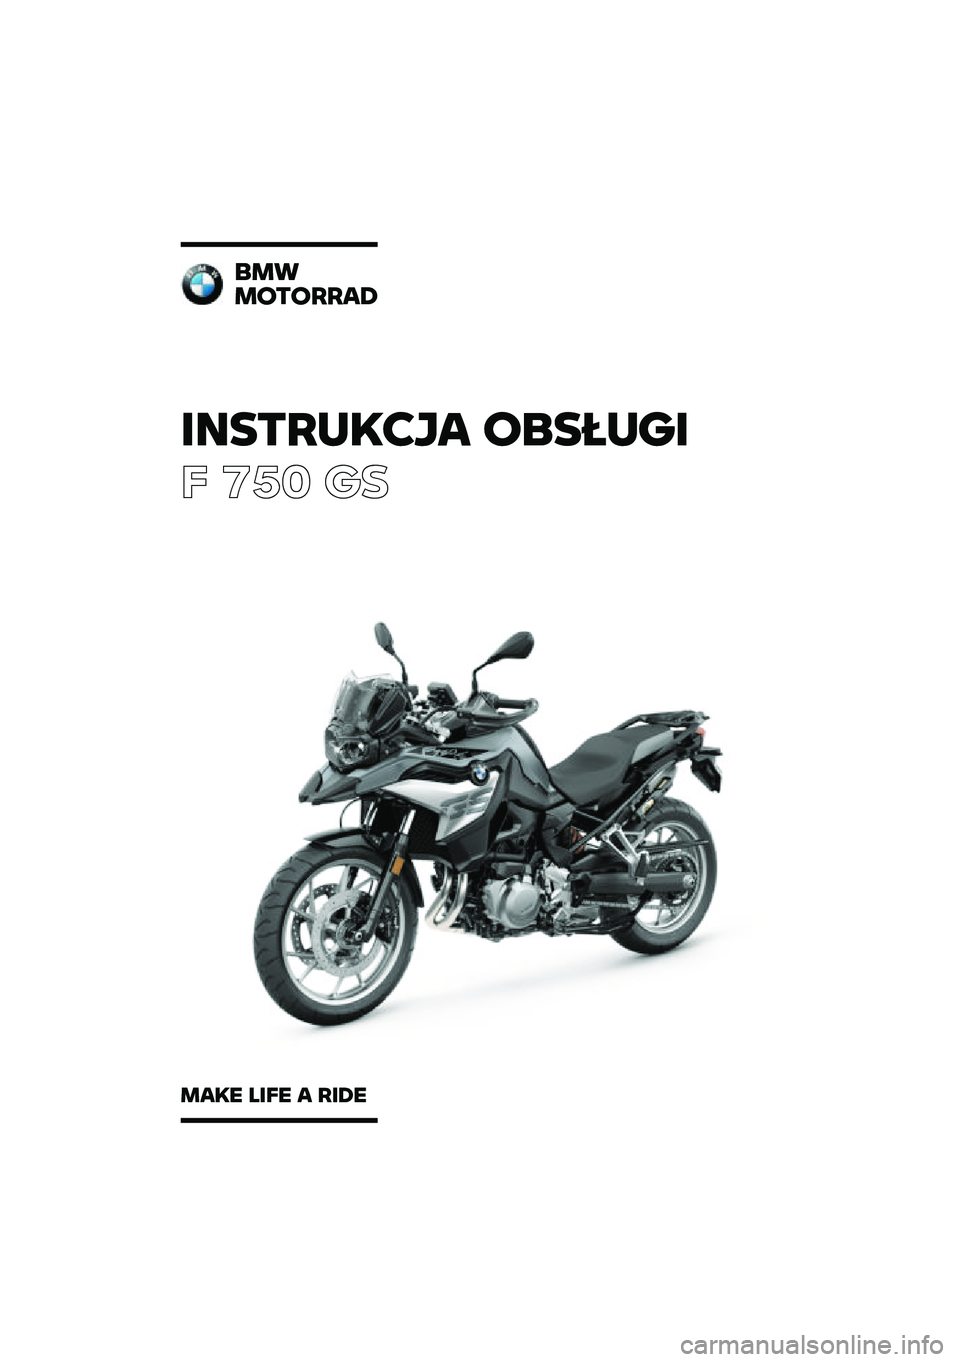 BMW MOTORRAD F 750 GS 2020  Instrukcja obsługi (in Polish) �������\b�	�
� �\f�
�����
� ��� �\b�	
�
��
��\f��\f����
���\b� ���� � ���� 